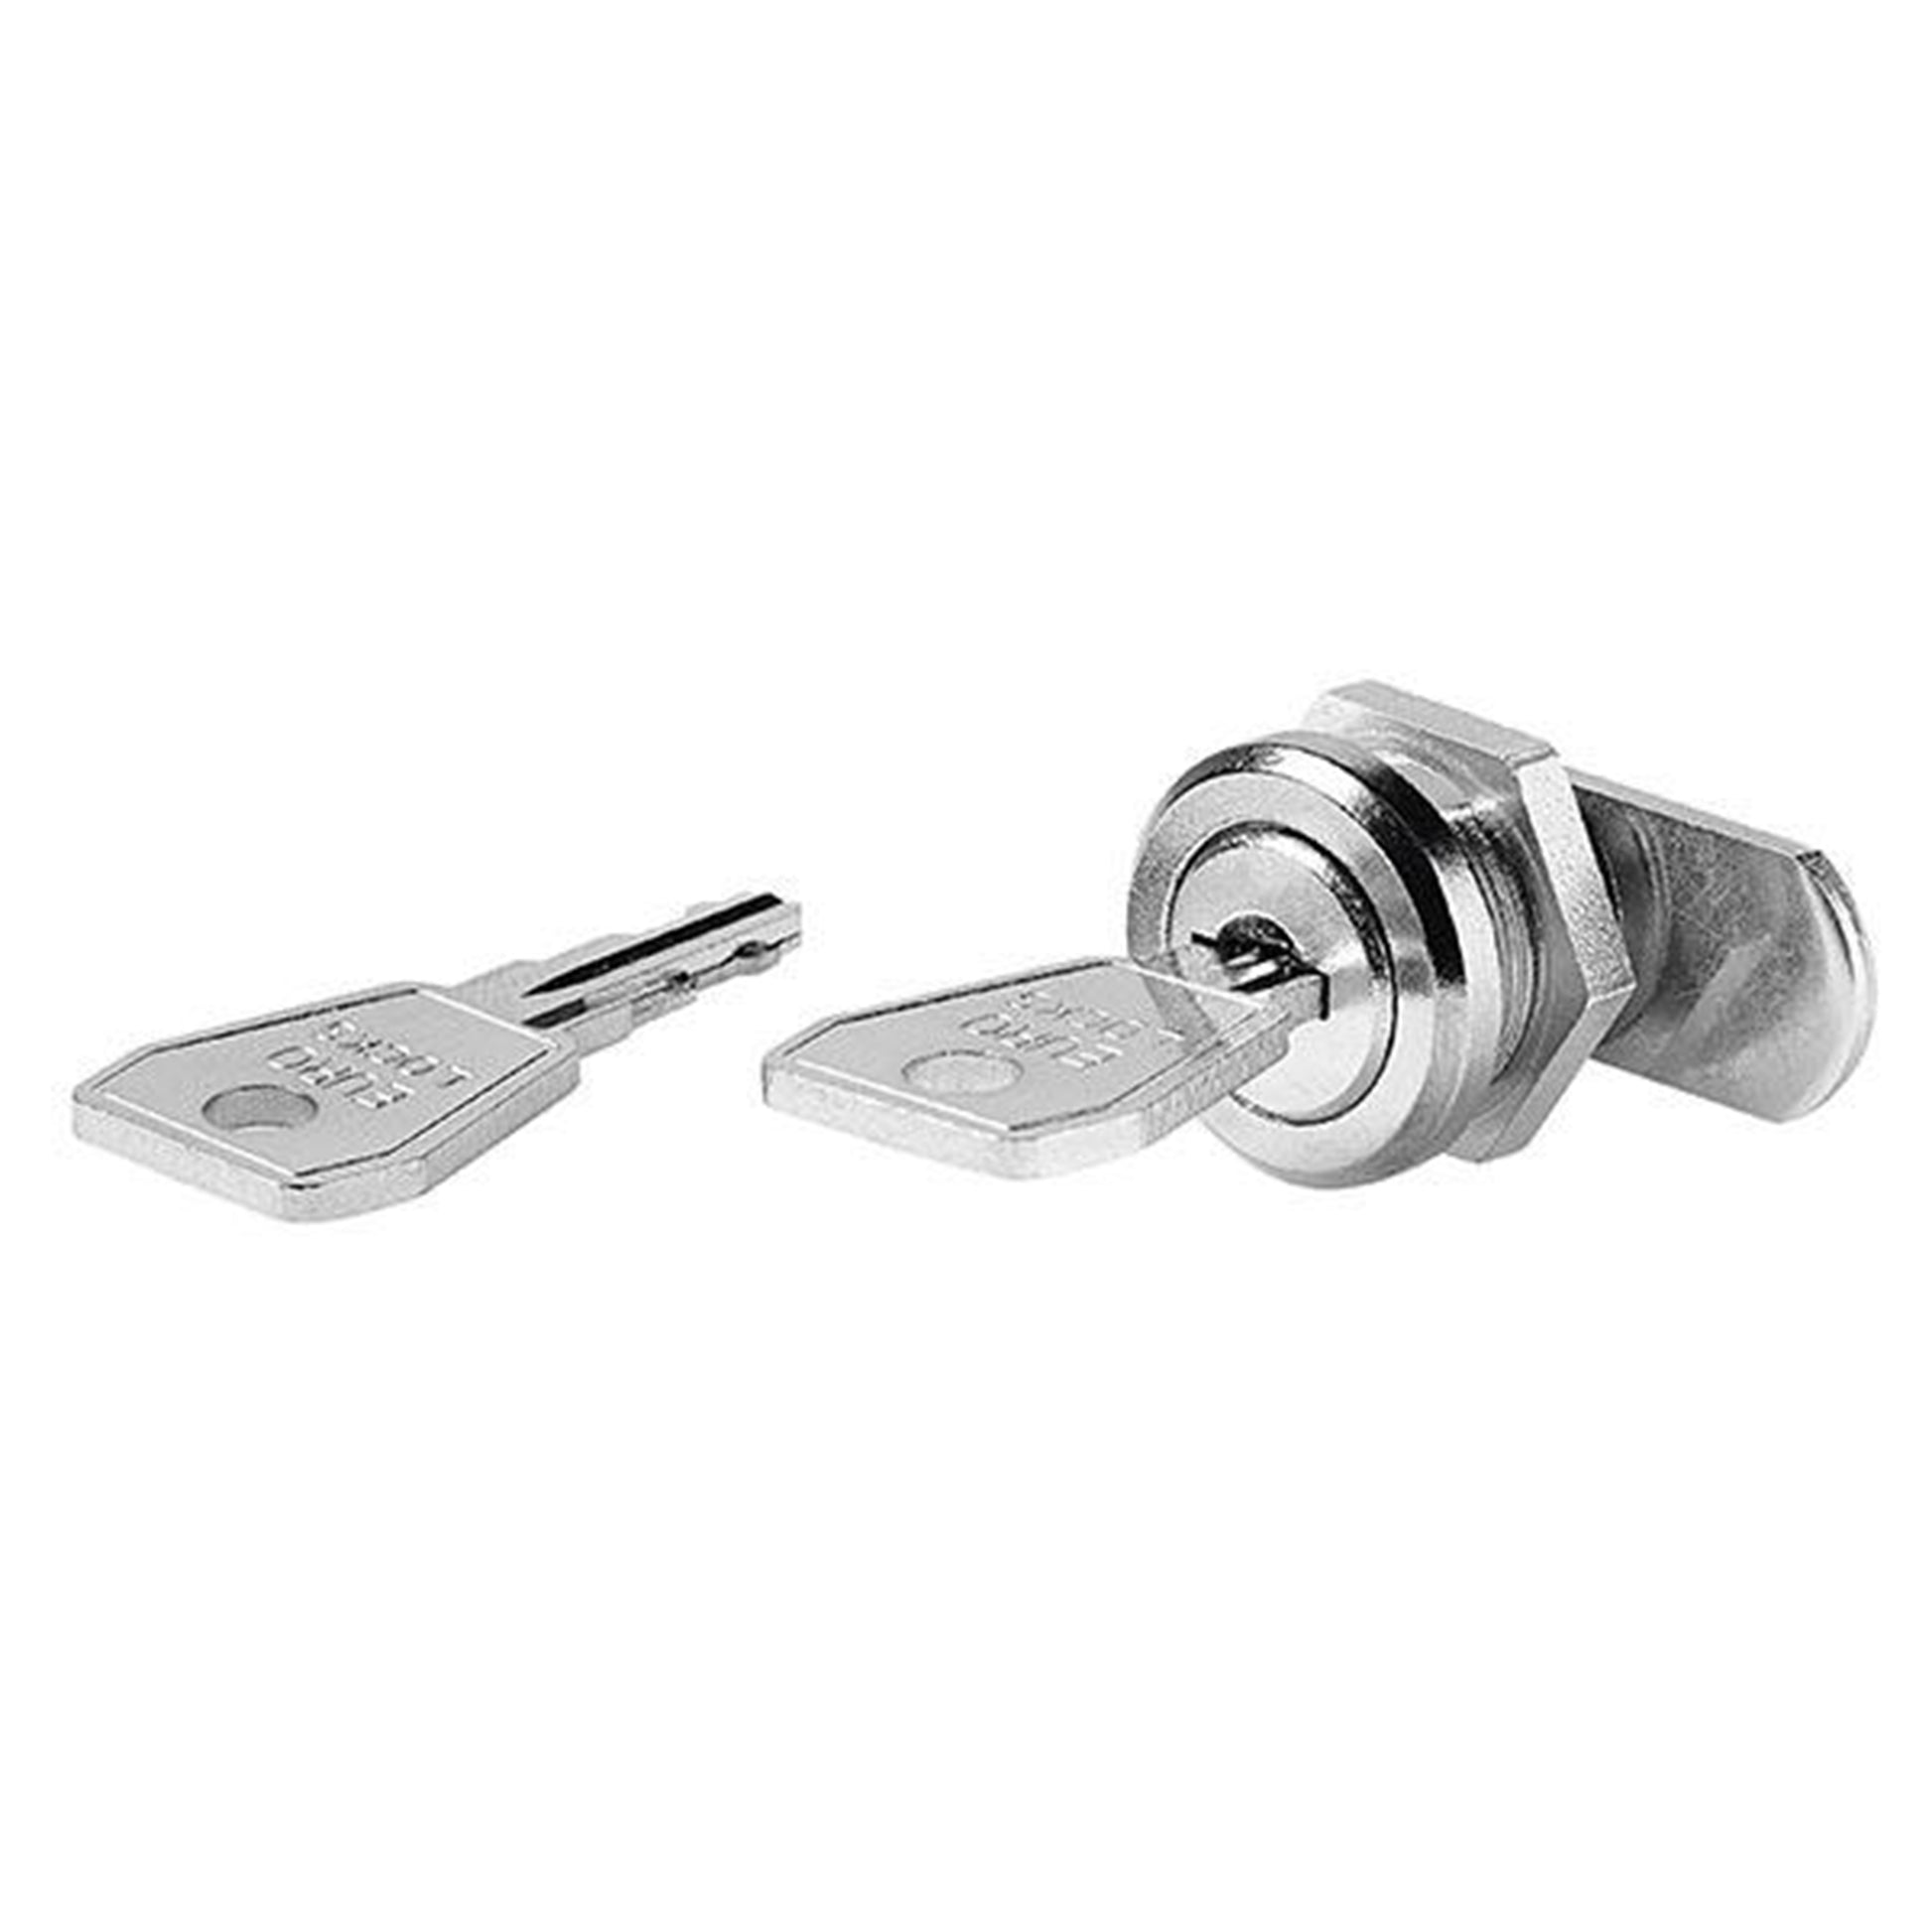 Lock and Key for SYS-AZ alt 0